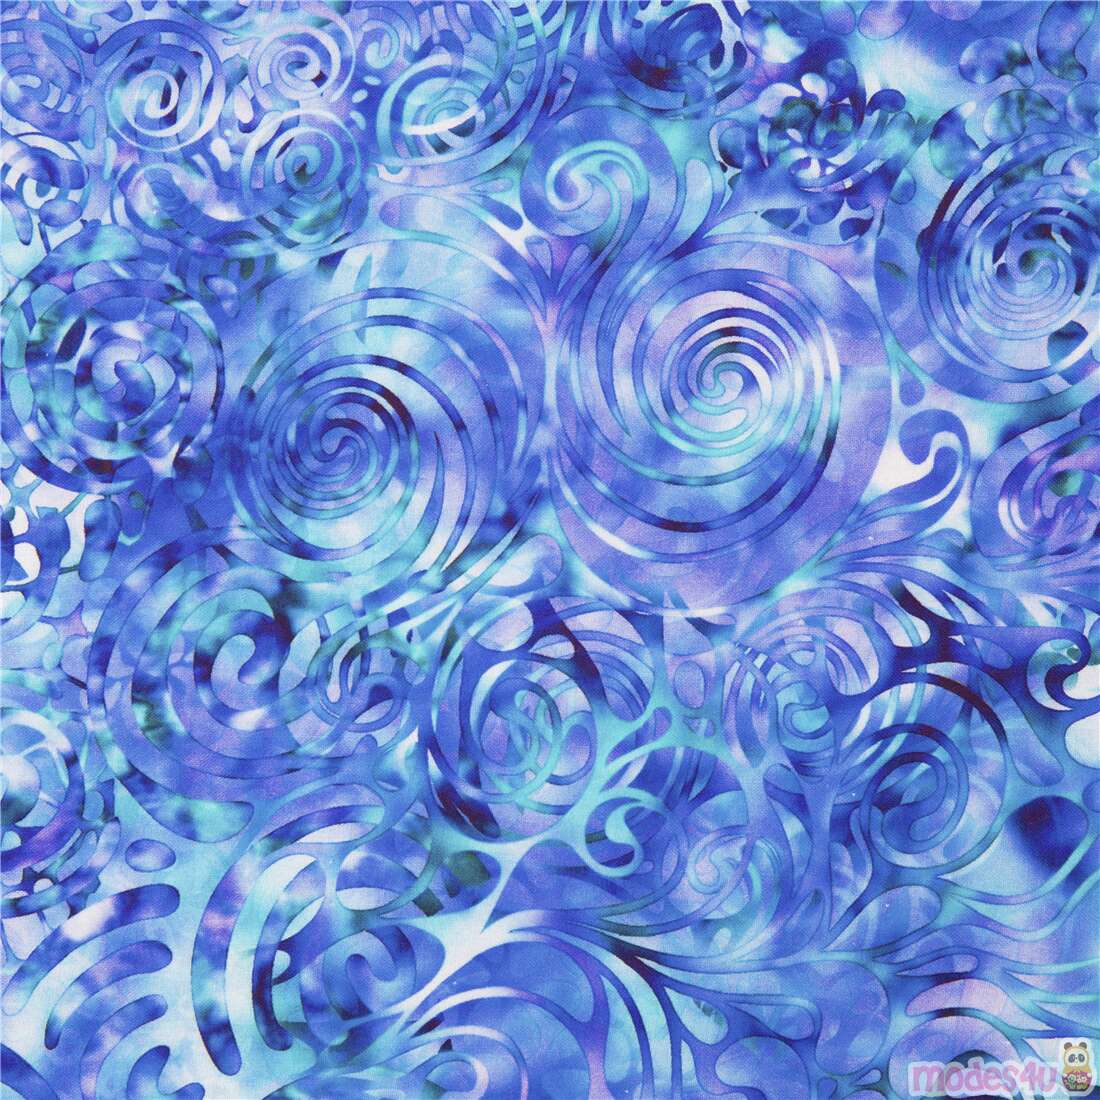 Remnant (50 x 270 cm) - Quilting Treasures batik style vibrant blue ...